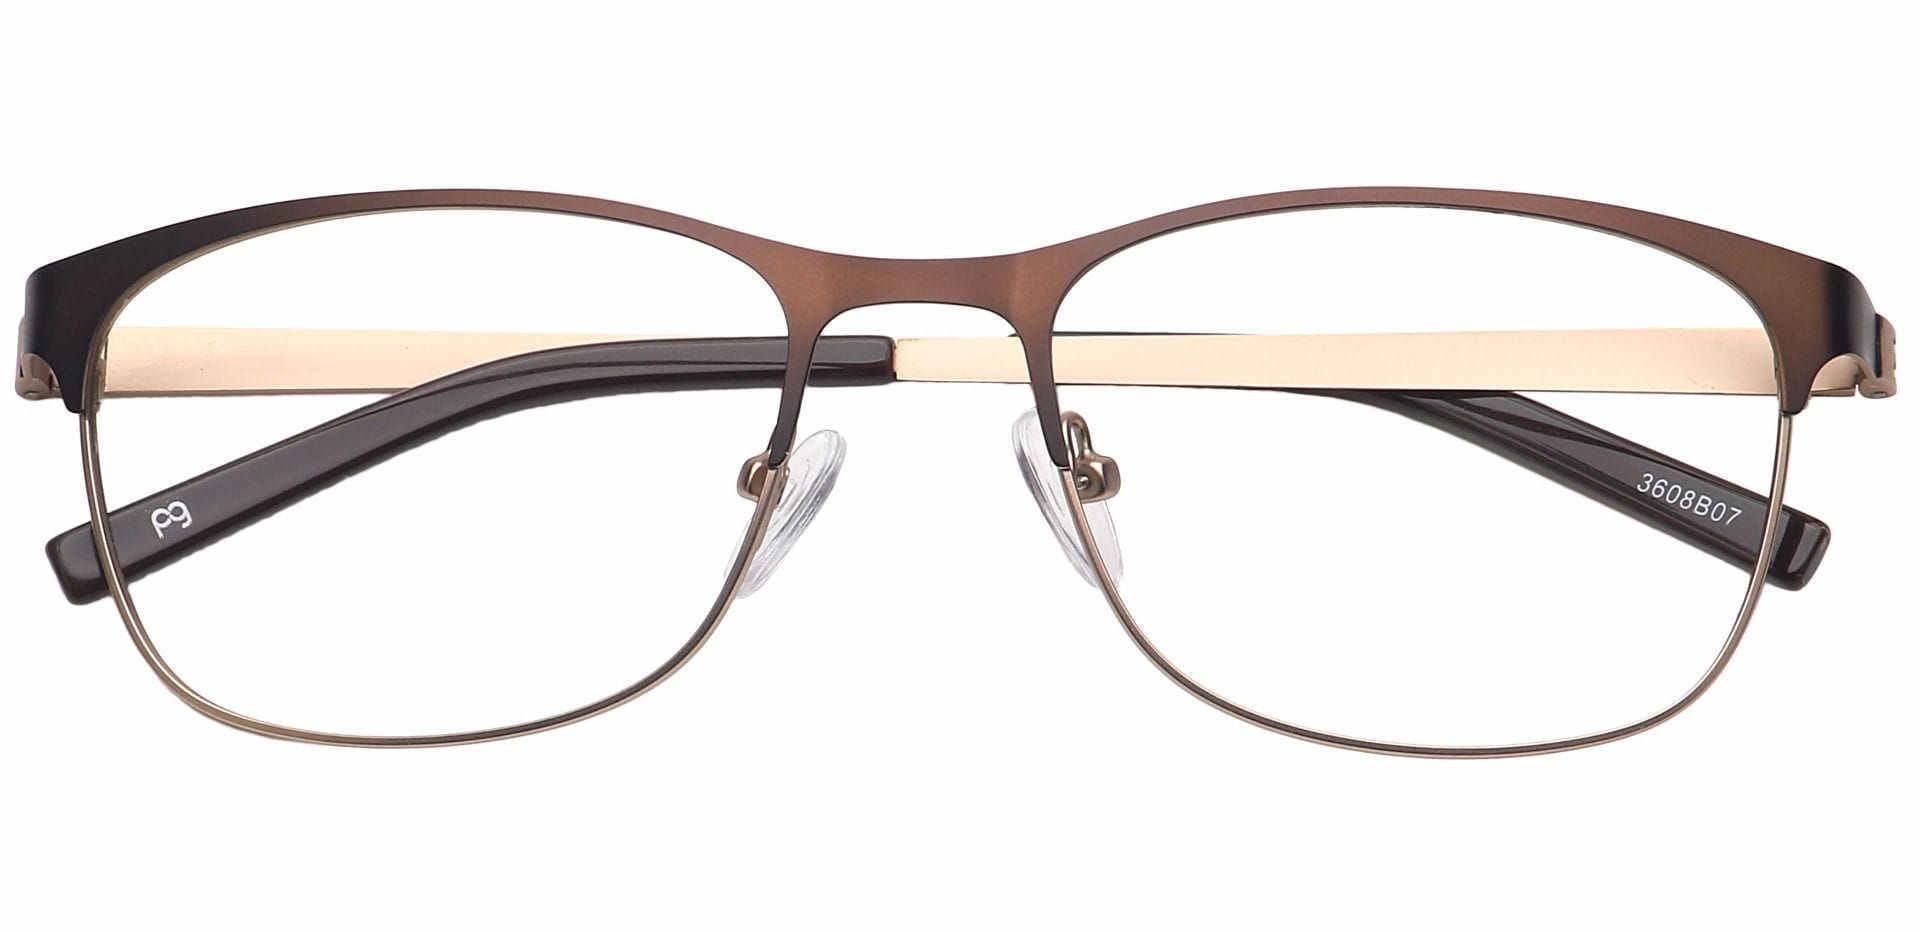 Tona Rectangle Lined Bifocal Glasses - Brown